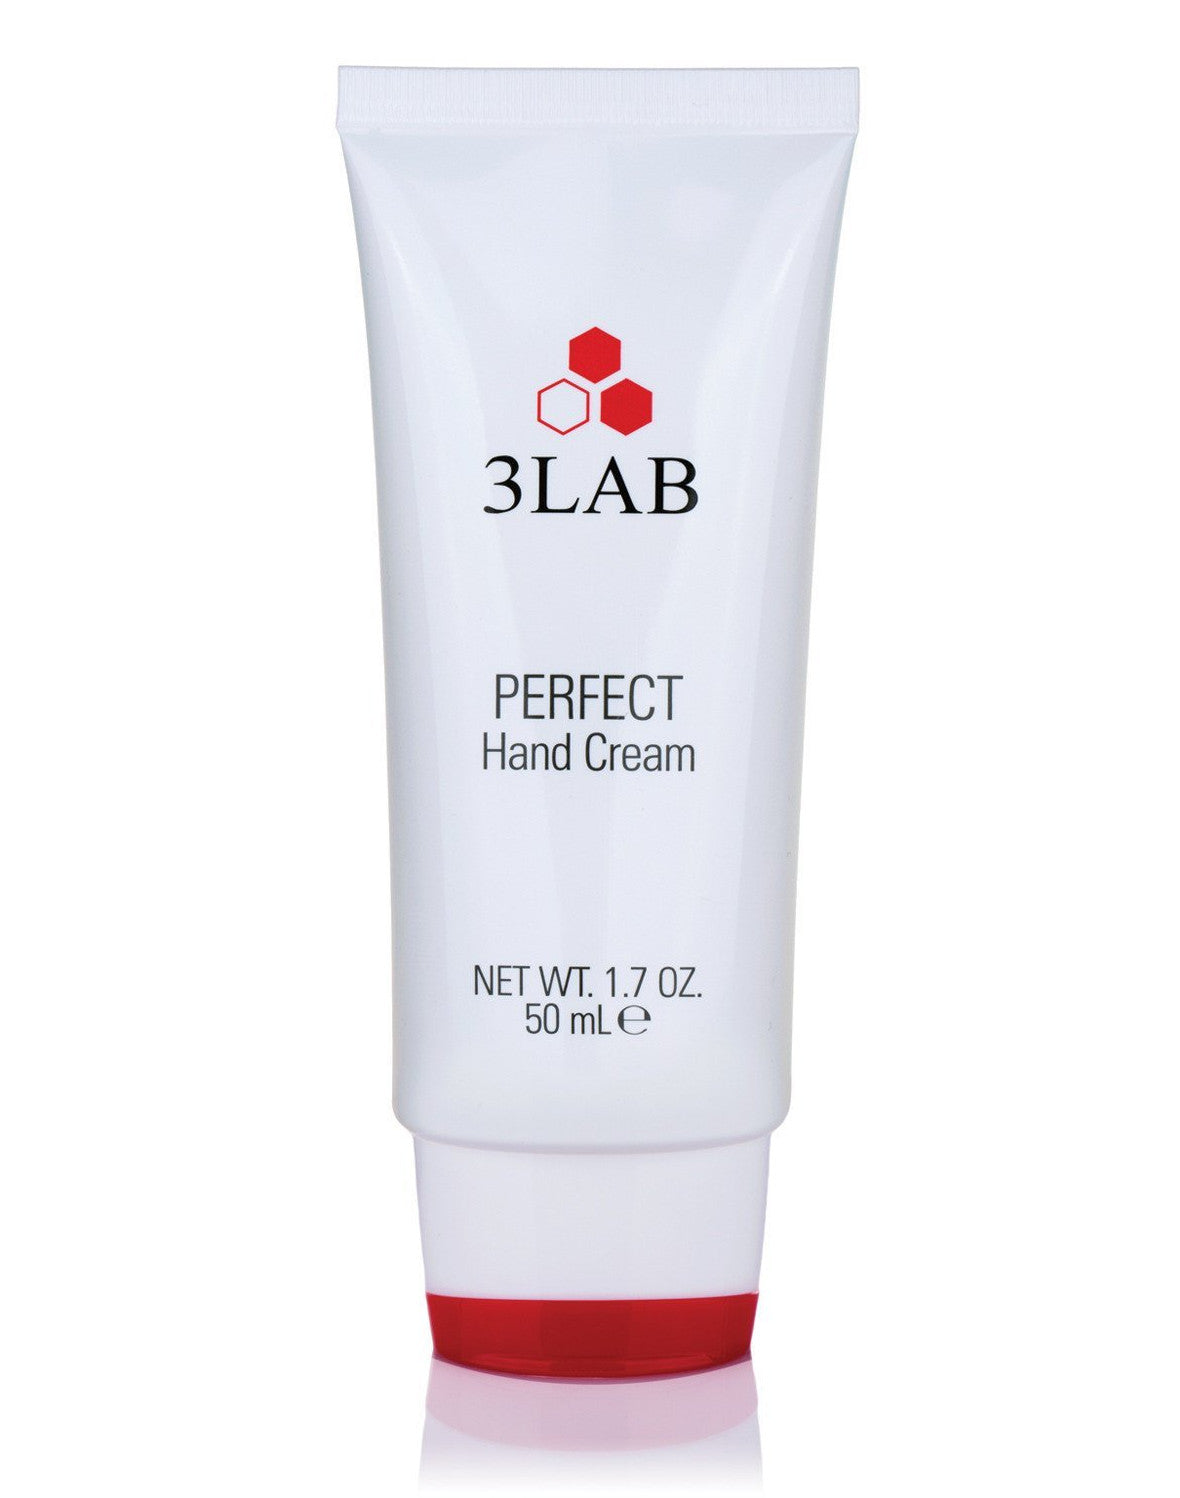 3LAB Perfect Hand Cream - eCosmeticWorld